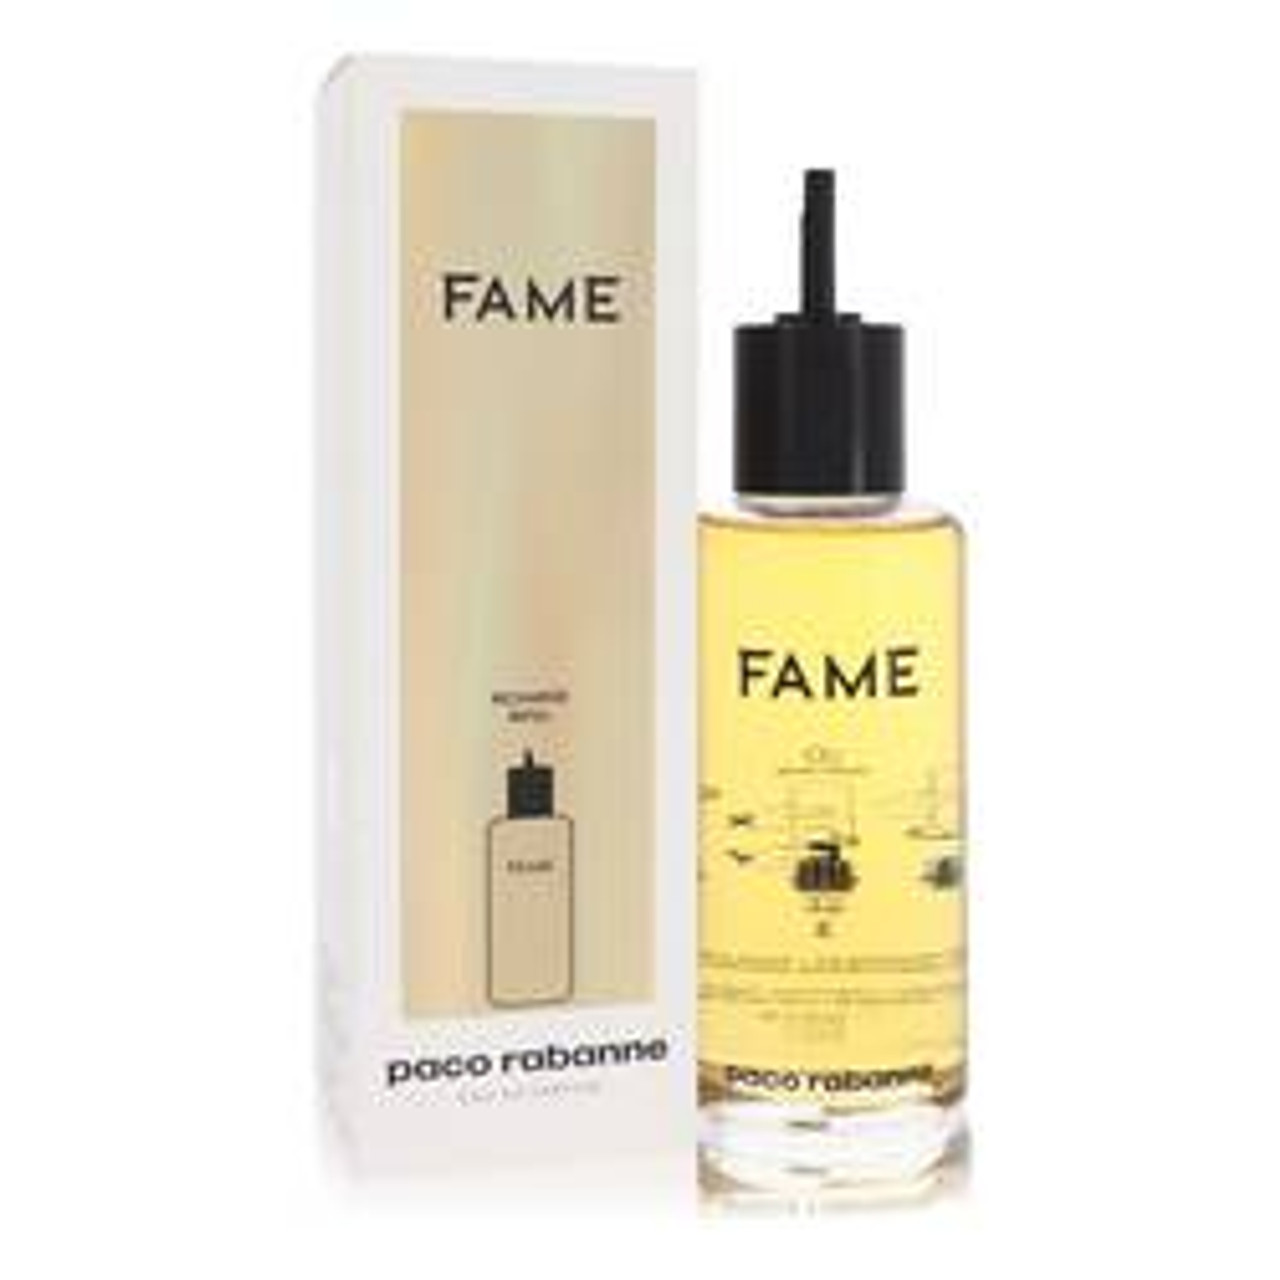 Paco Rabanne Fame Perfume By Paco Rabanne Eau De Parfum Refill 6.8 oz for Women - *Pre-Order